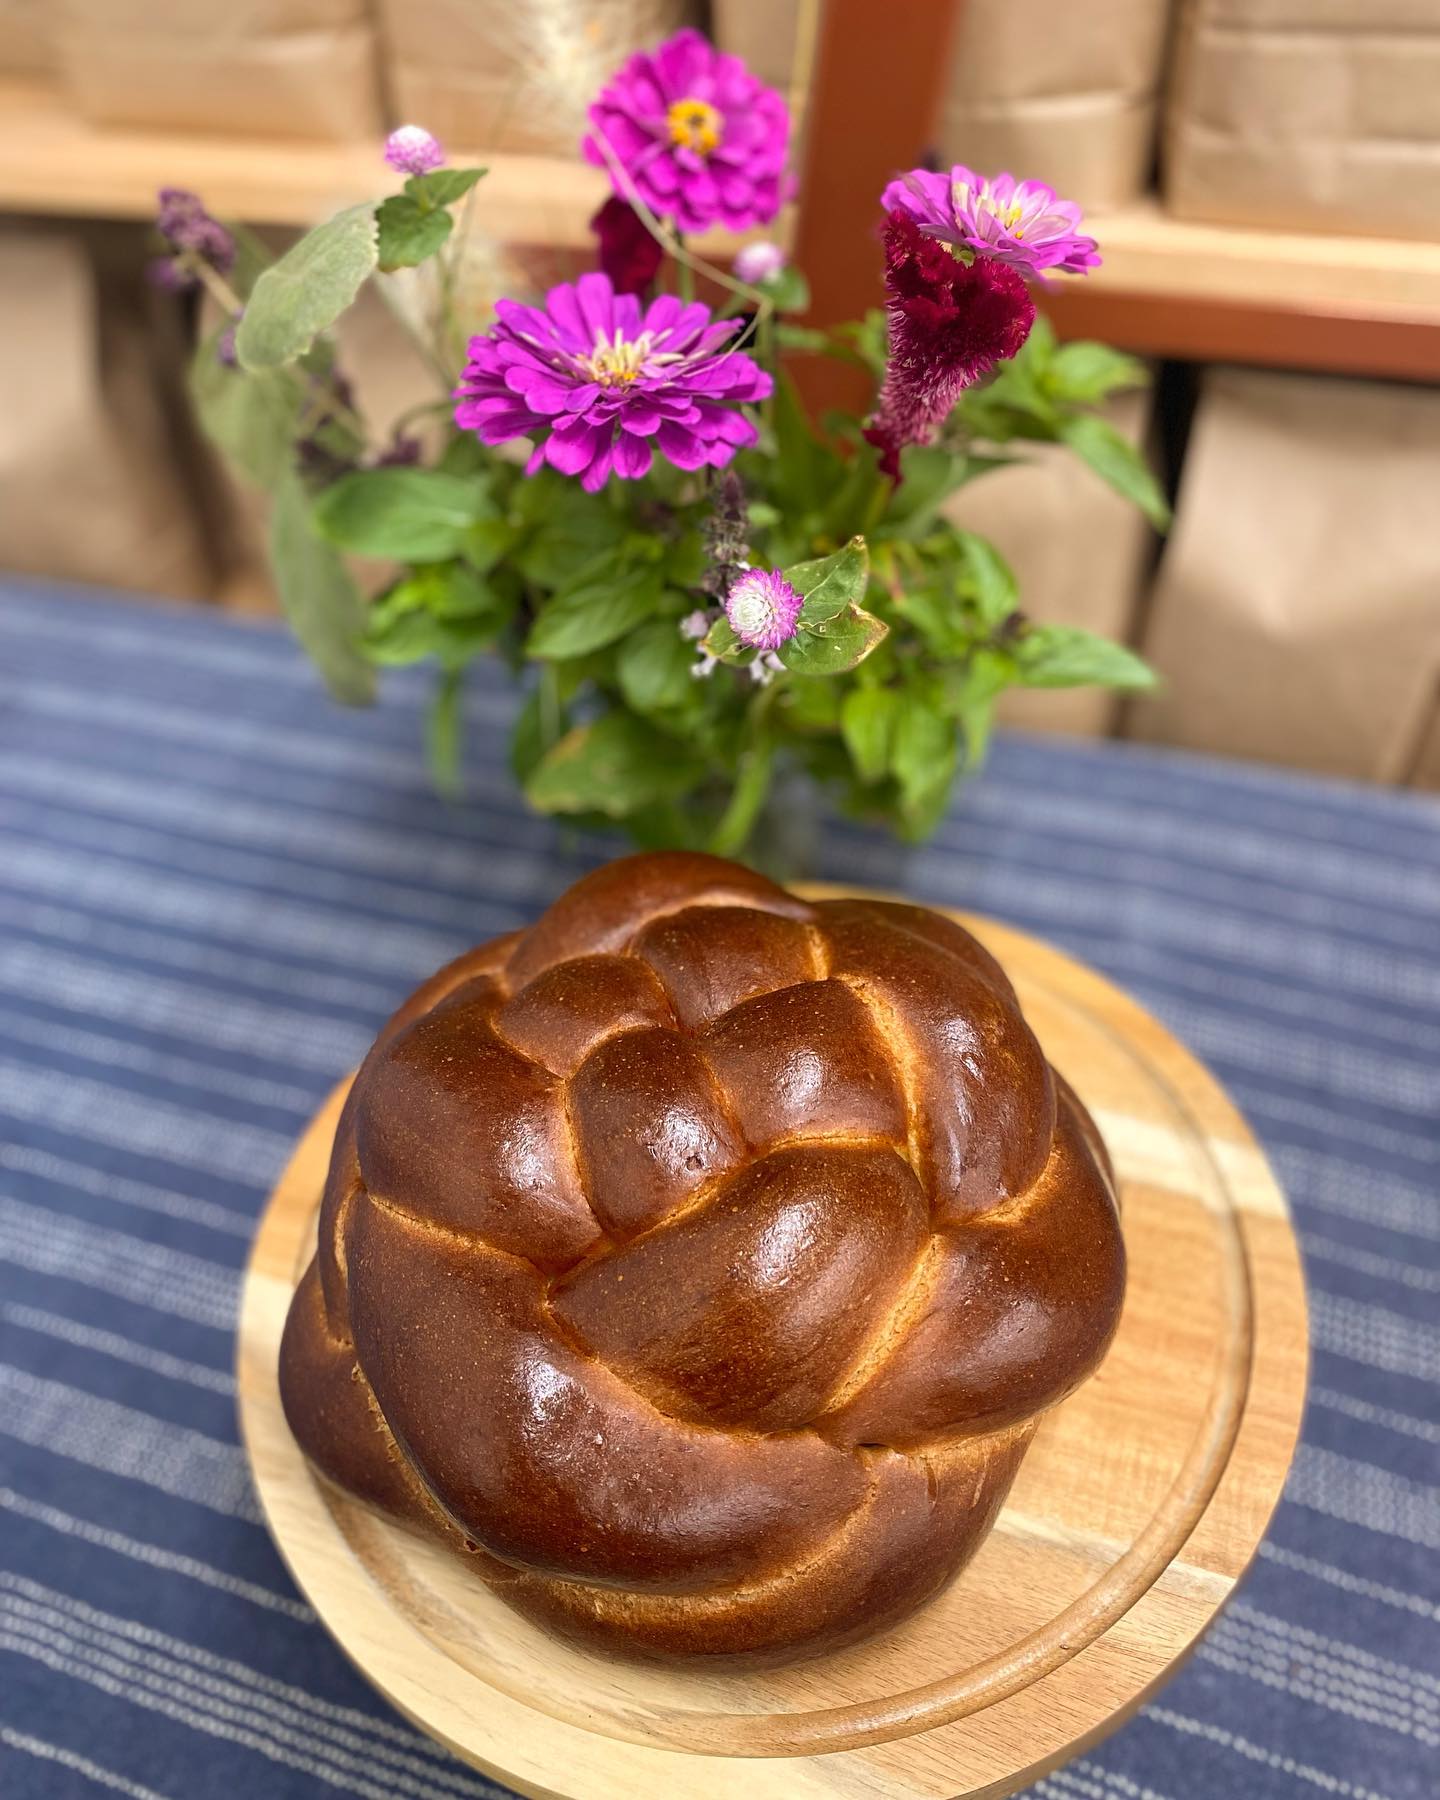 A round braided bread loaf.